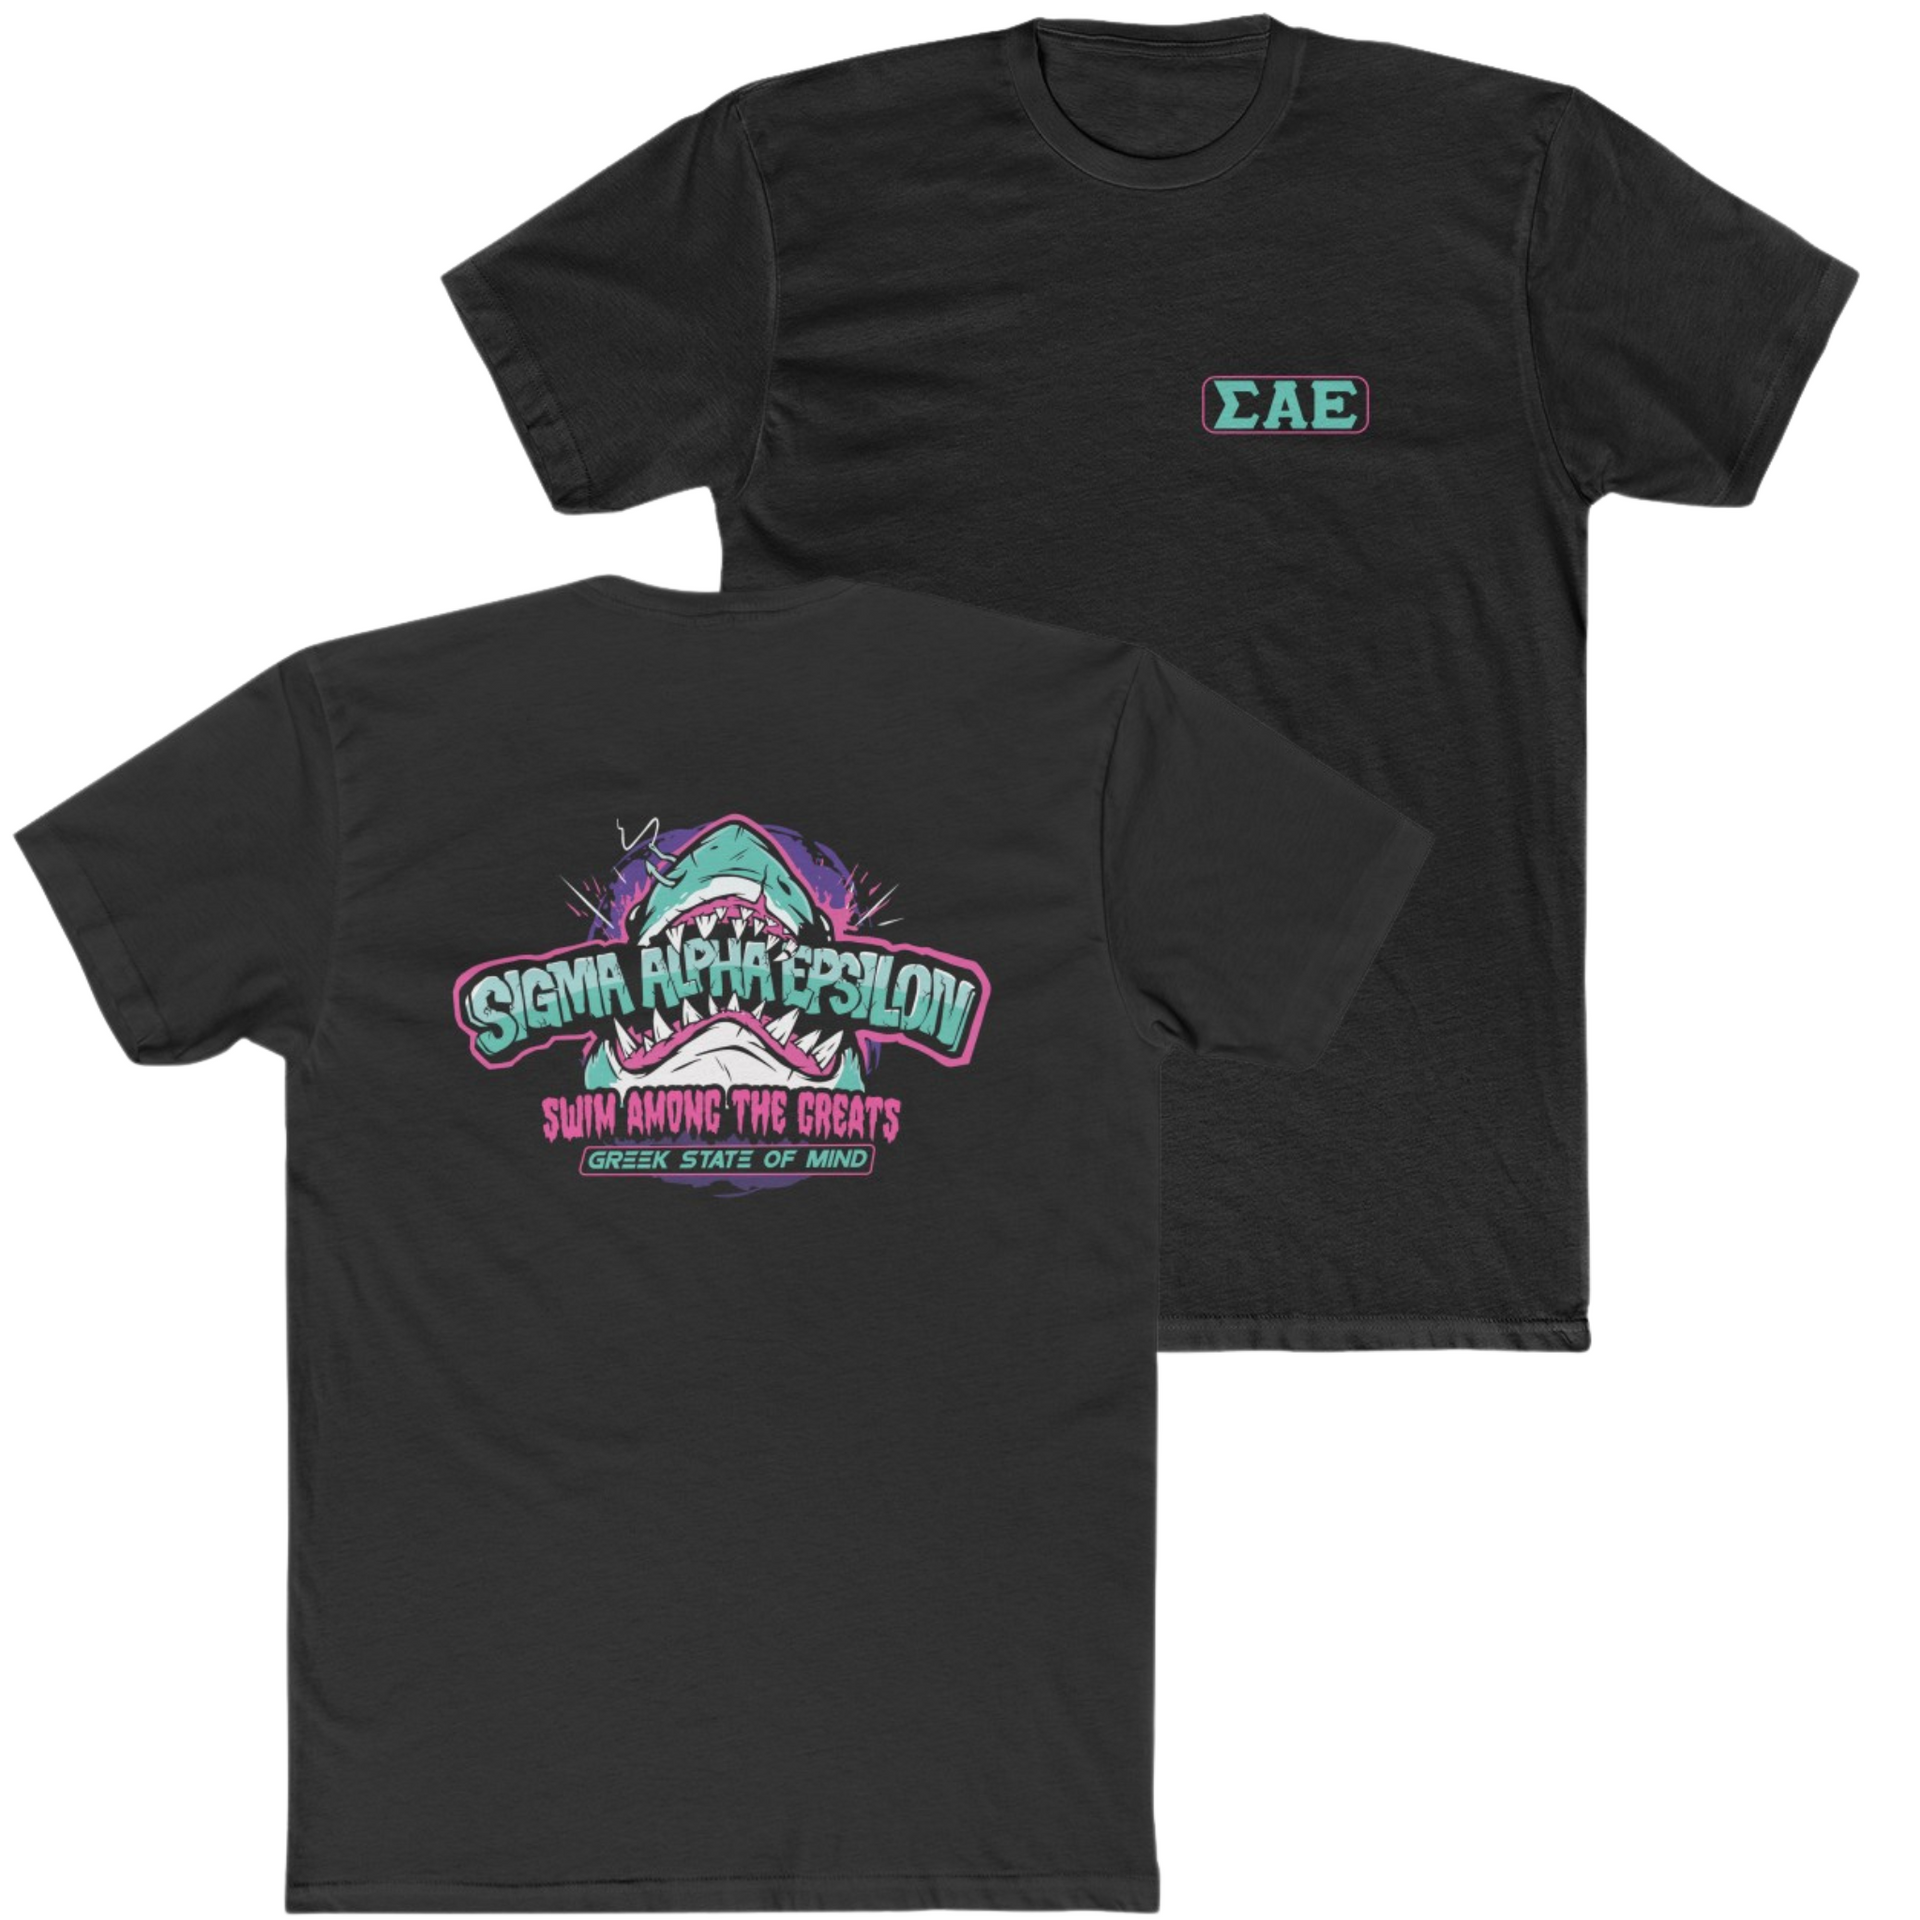 Black Sigma Alpha Epsilon Graphic T-Shirt | The Deep End | Sigma Alpha Epsilon Clothing and Merchandise 